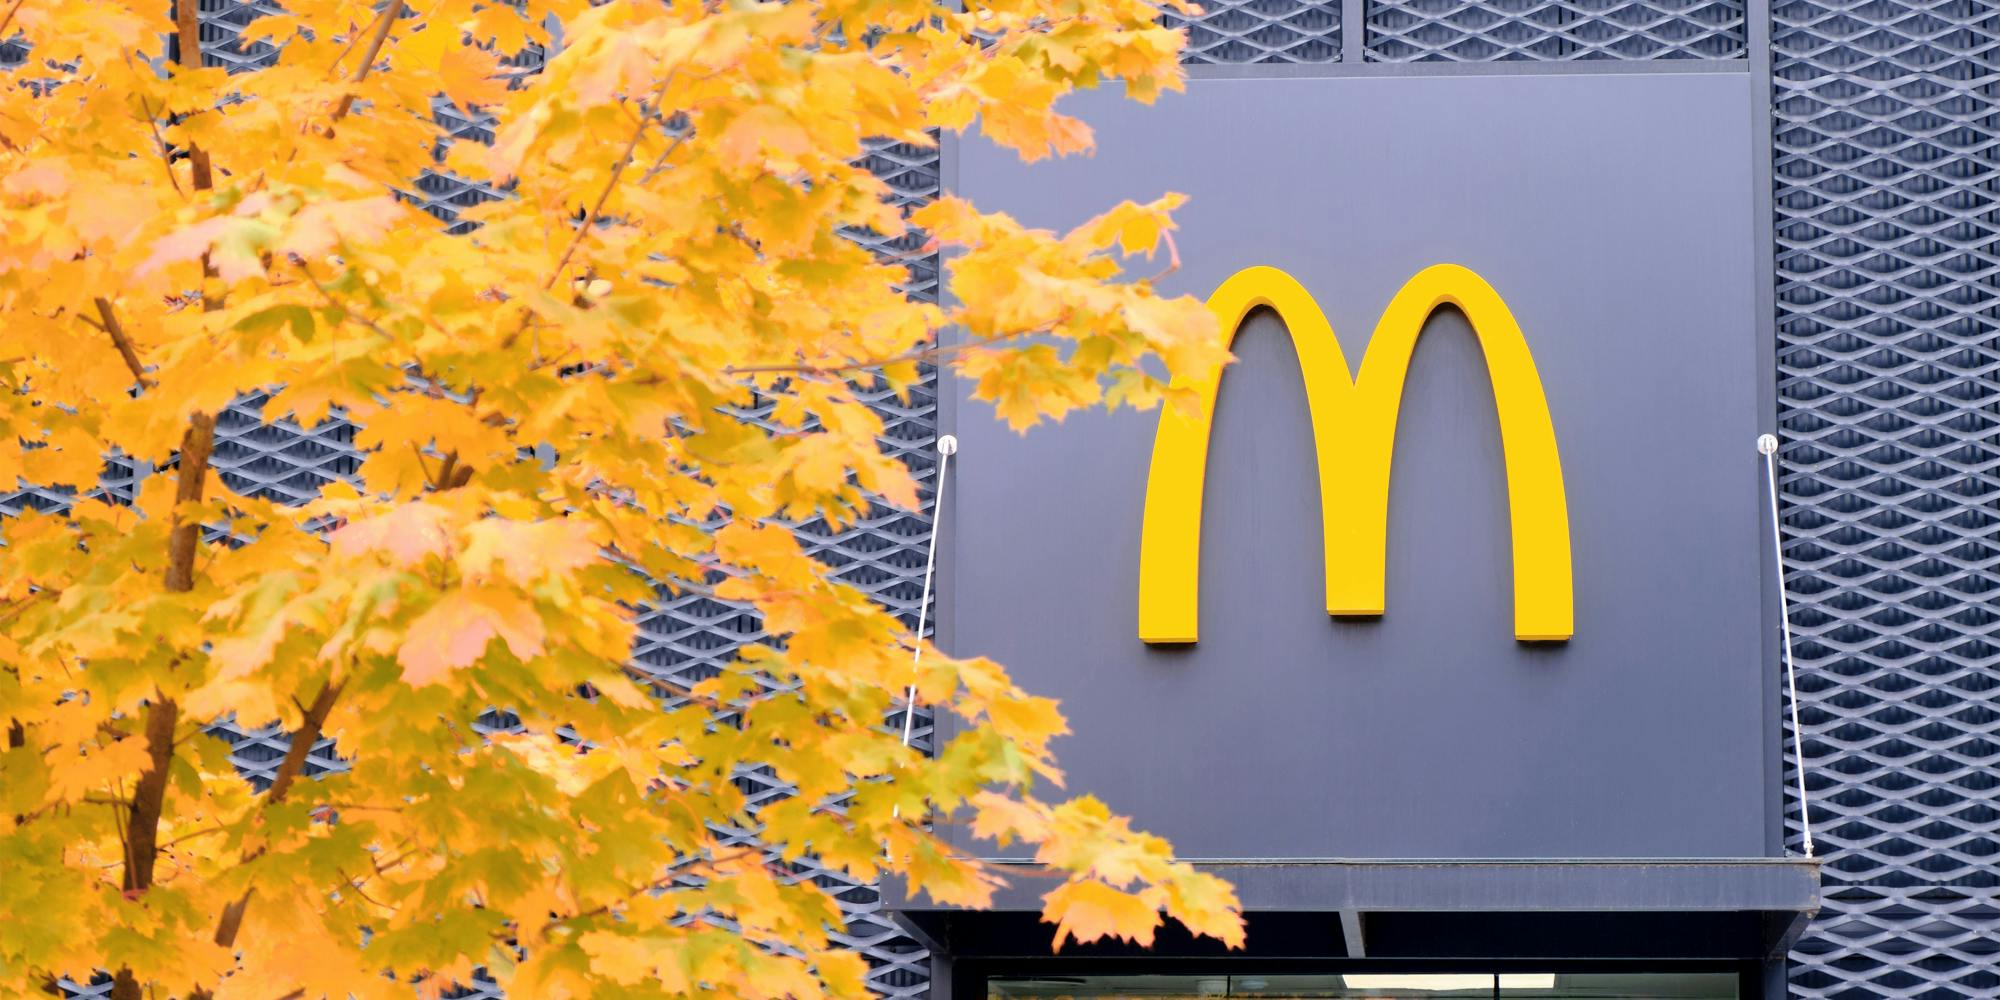 Is McDonald's Open on Thanksgiving?